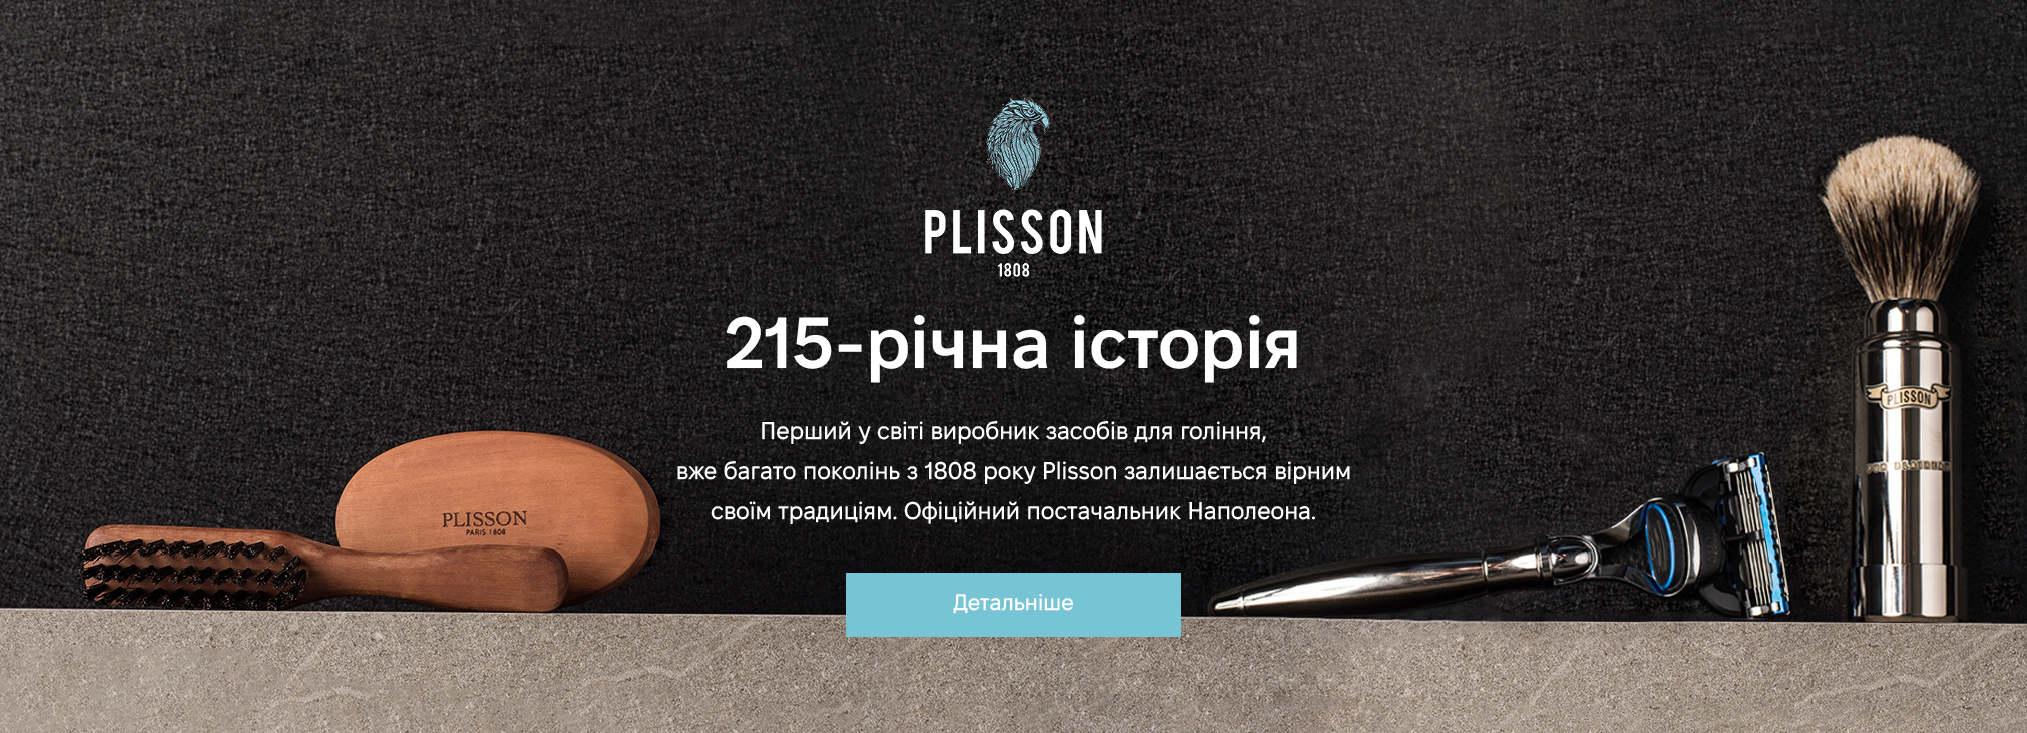 Plisson_20280